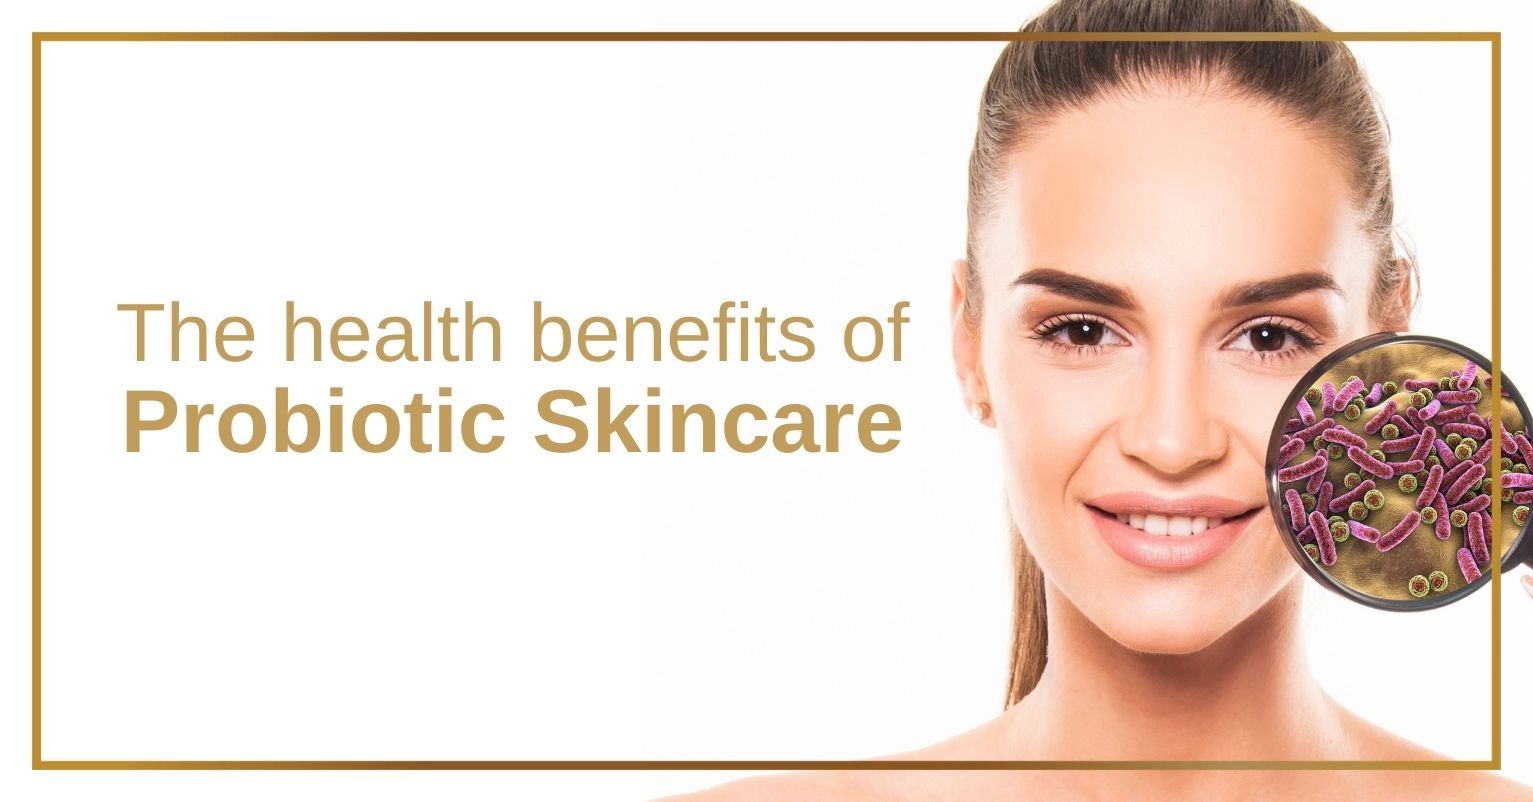 The health benefits of Probiotics skincare